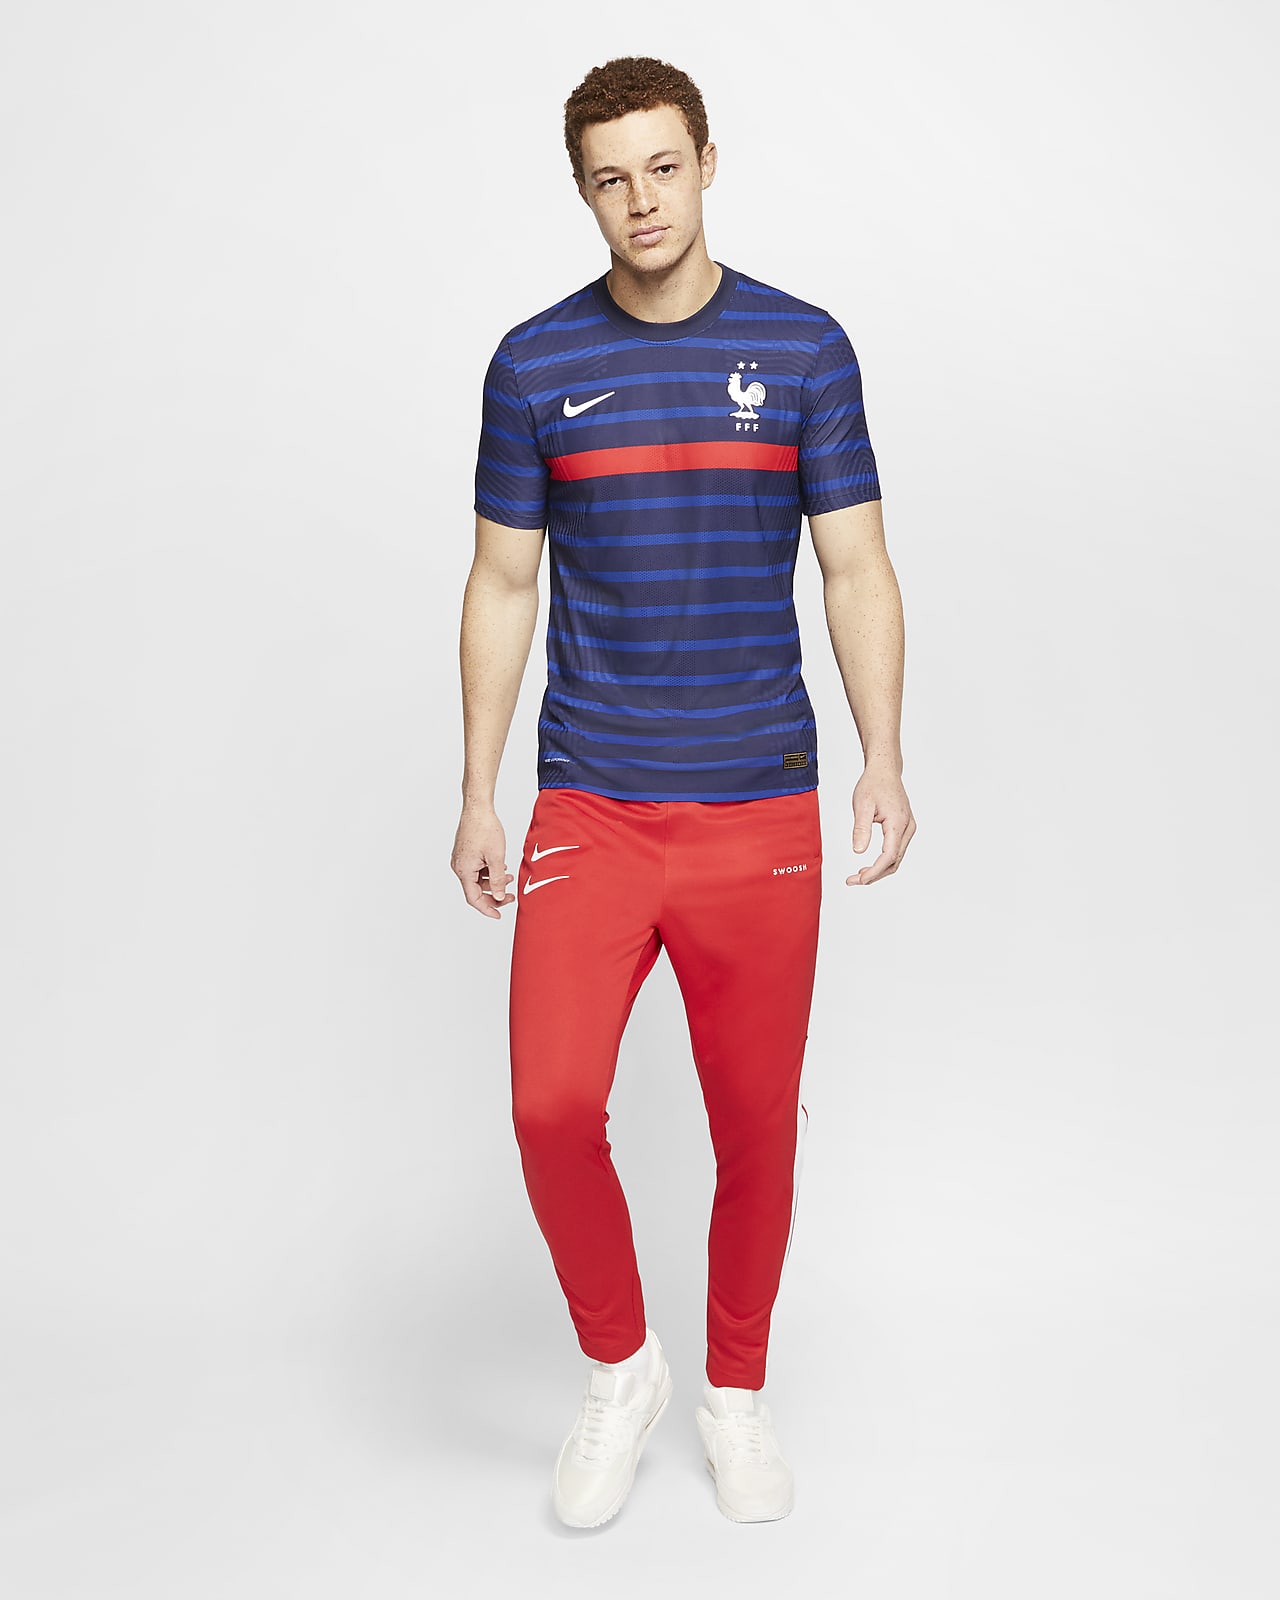 Vapor Match FFF 2020 Camiseta de fútbol Nike ES